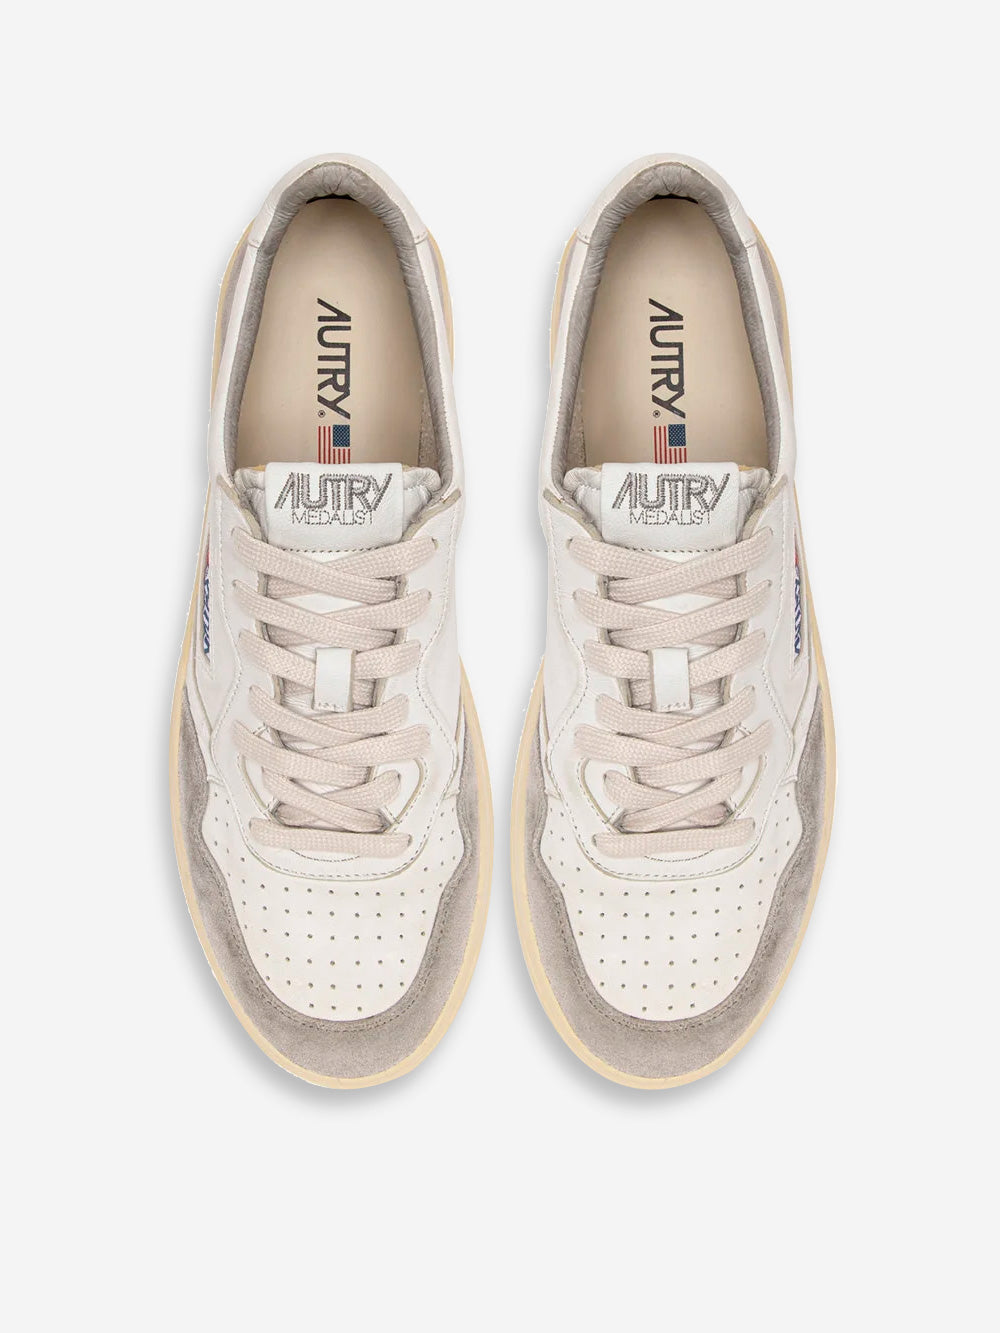 AUTRY M Medalist Low Sneakers Bianco grigio Urbanstaroma